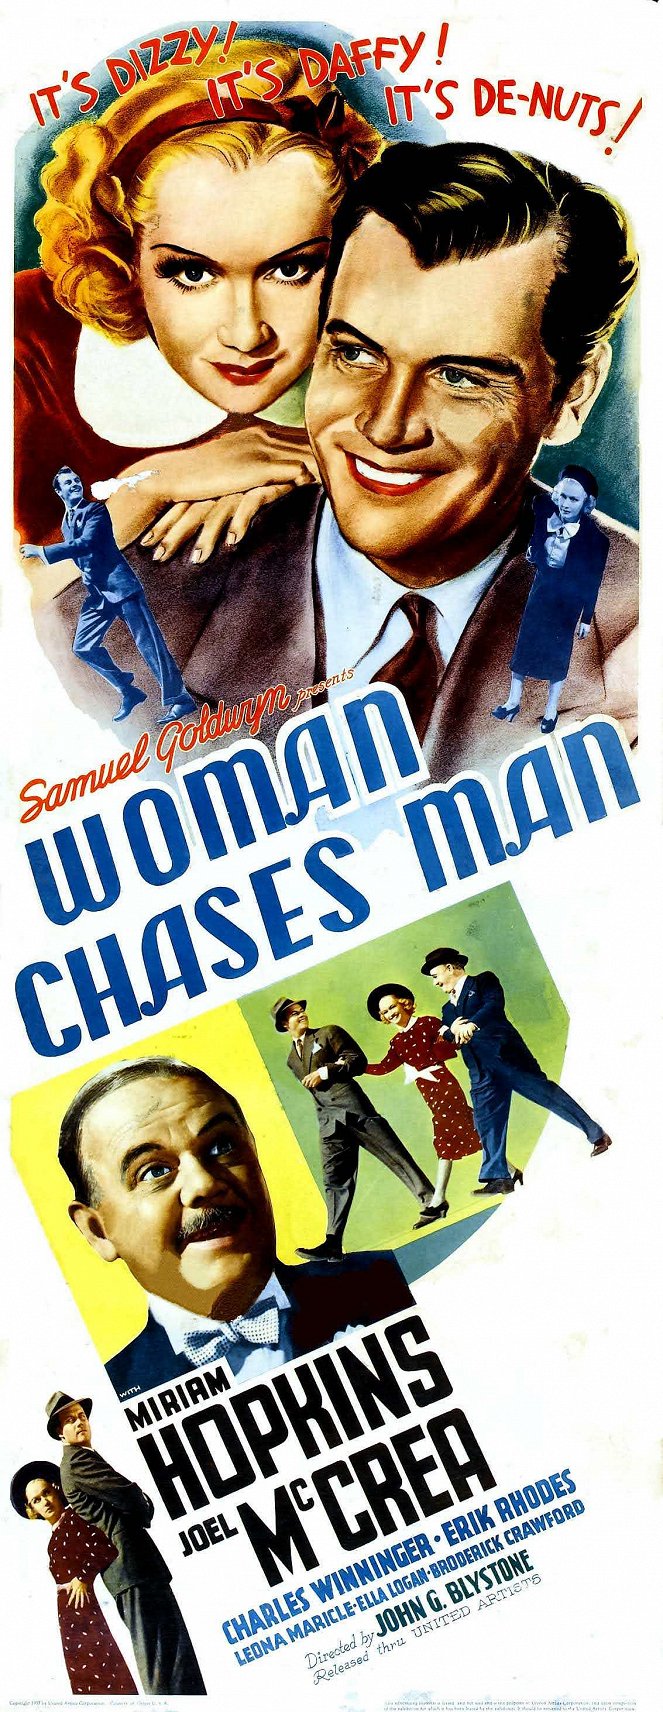 Woman Chases Man - Plakátok